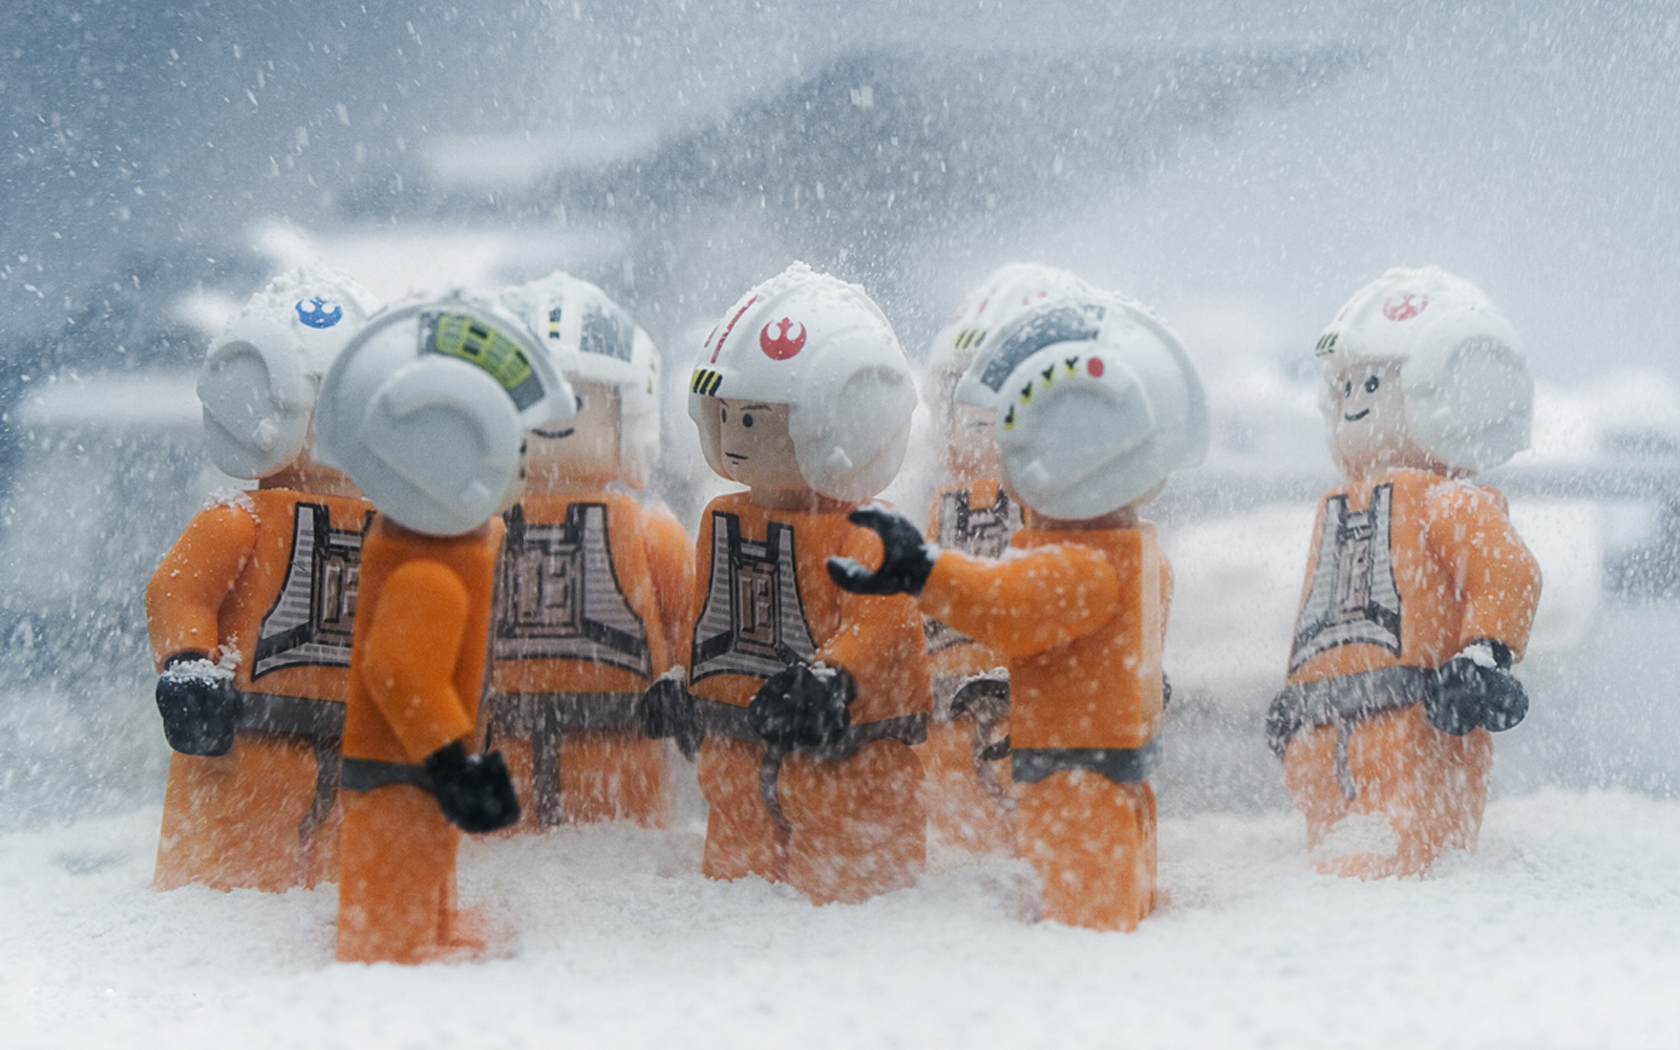 Lego Star Wars - Legos In The Snow - HD Wallpaper 